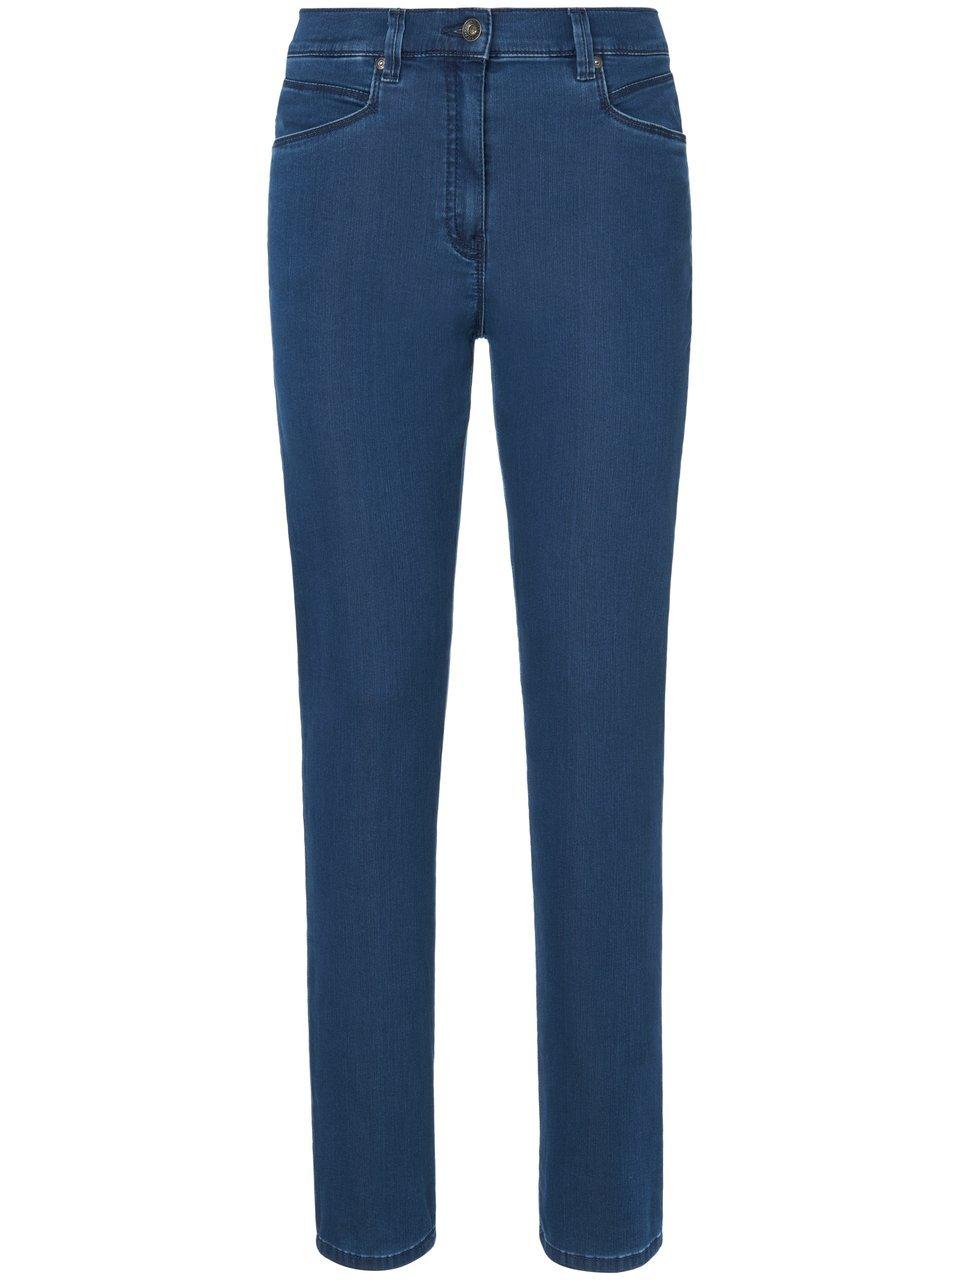 ProForm S Super Slim jeans model Lea Van Raphaela by Brax denim